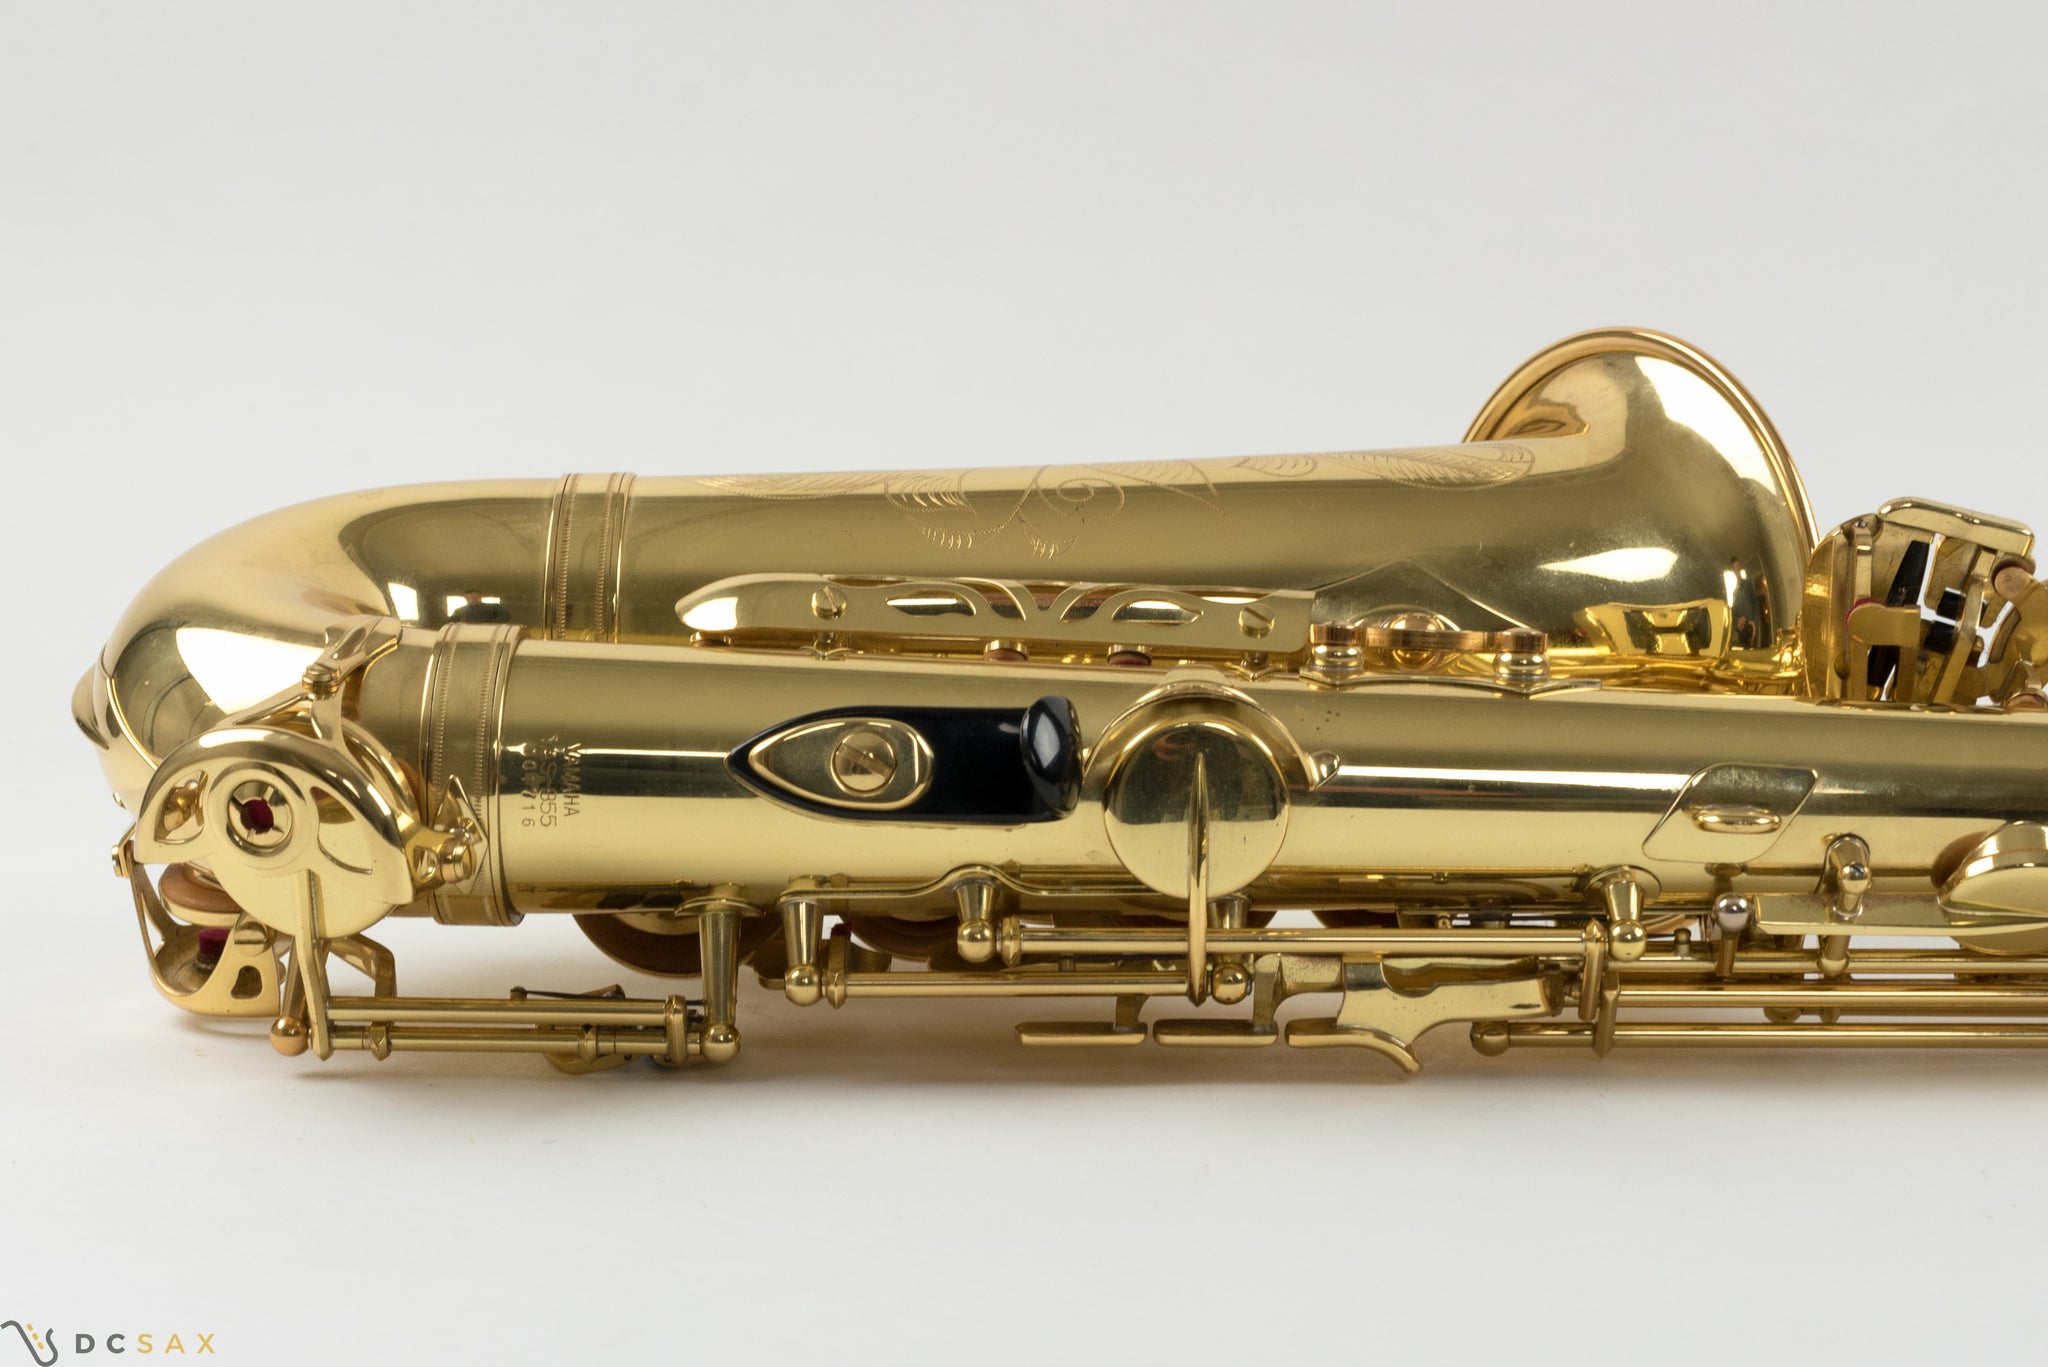 yamaha yas 62 alto saxophone serial numbers